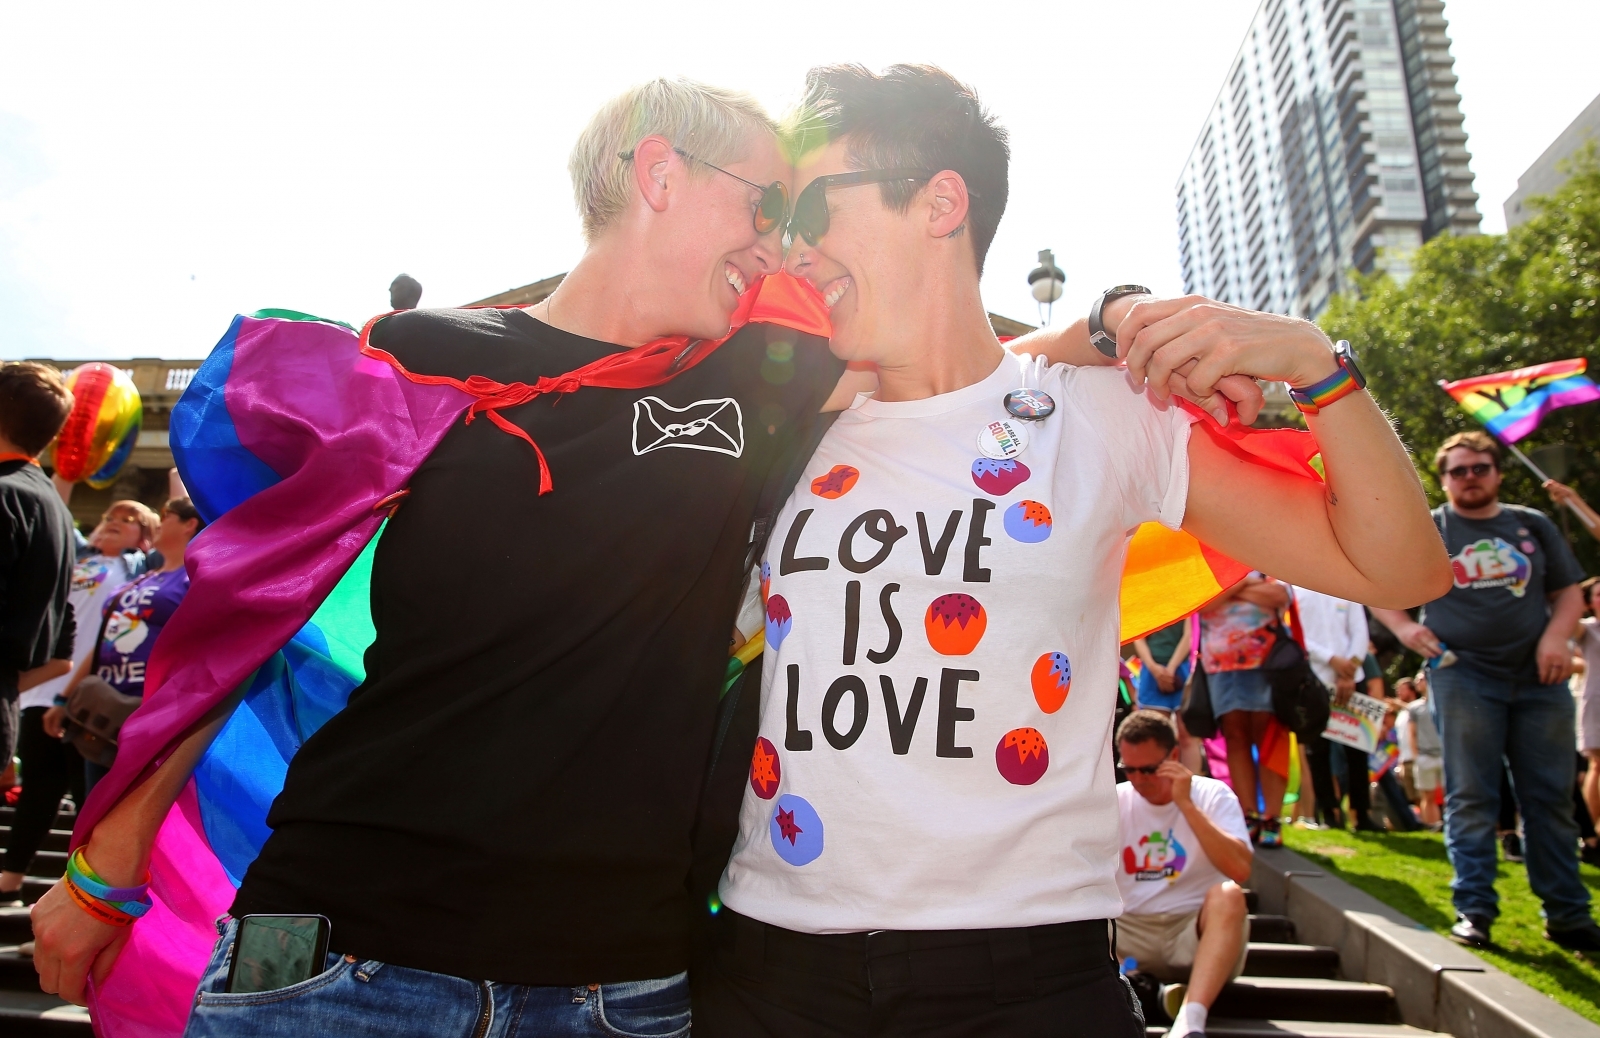 Australia Votes Yes To Same Sex Marriage In Historic National Postal Survey